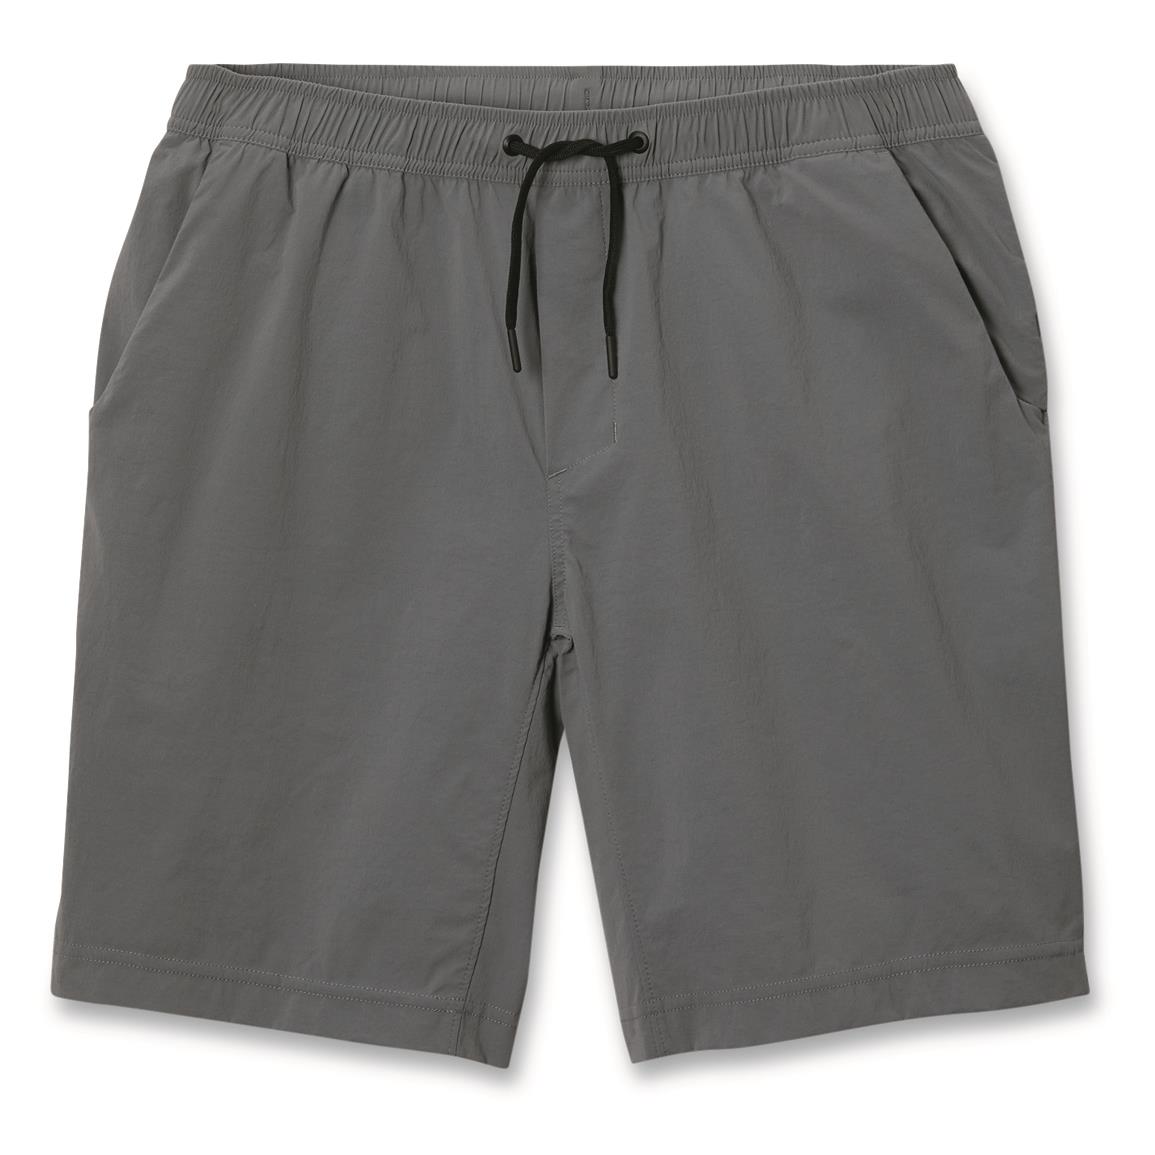 Mountain Hardwear Men's Basin Pull-On Short, Foil Grey